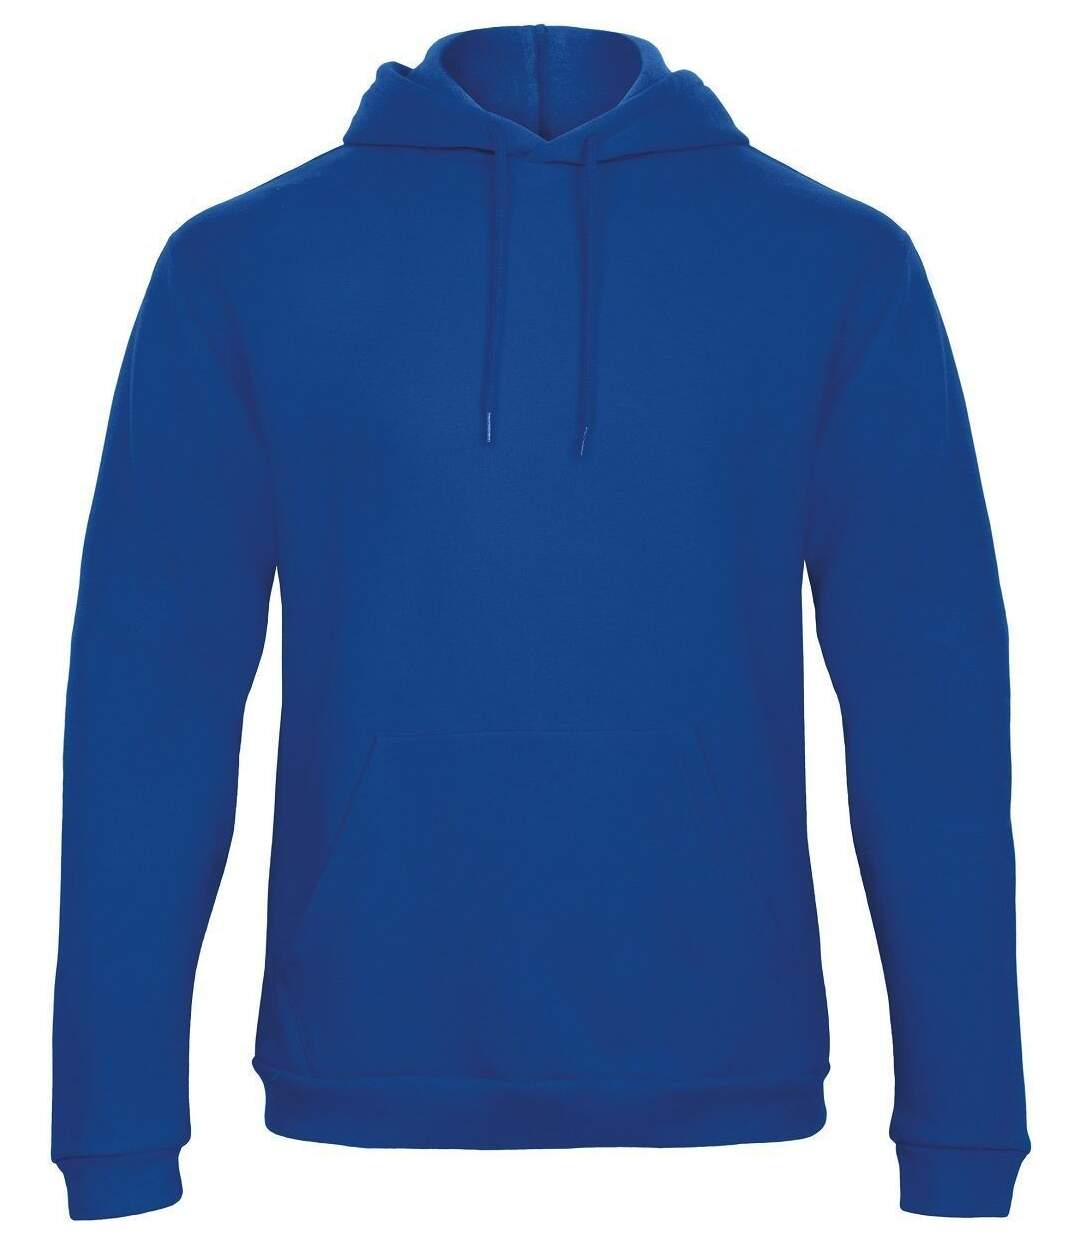 Sweat-shirt à capuche - unisexe - WUI24 - bleu roi